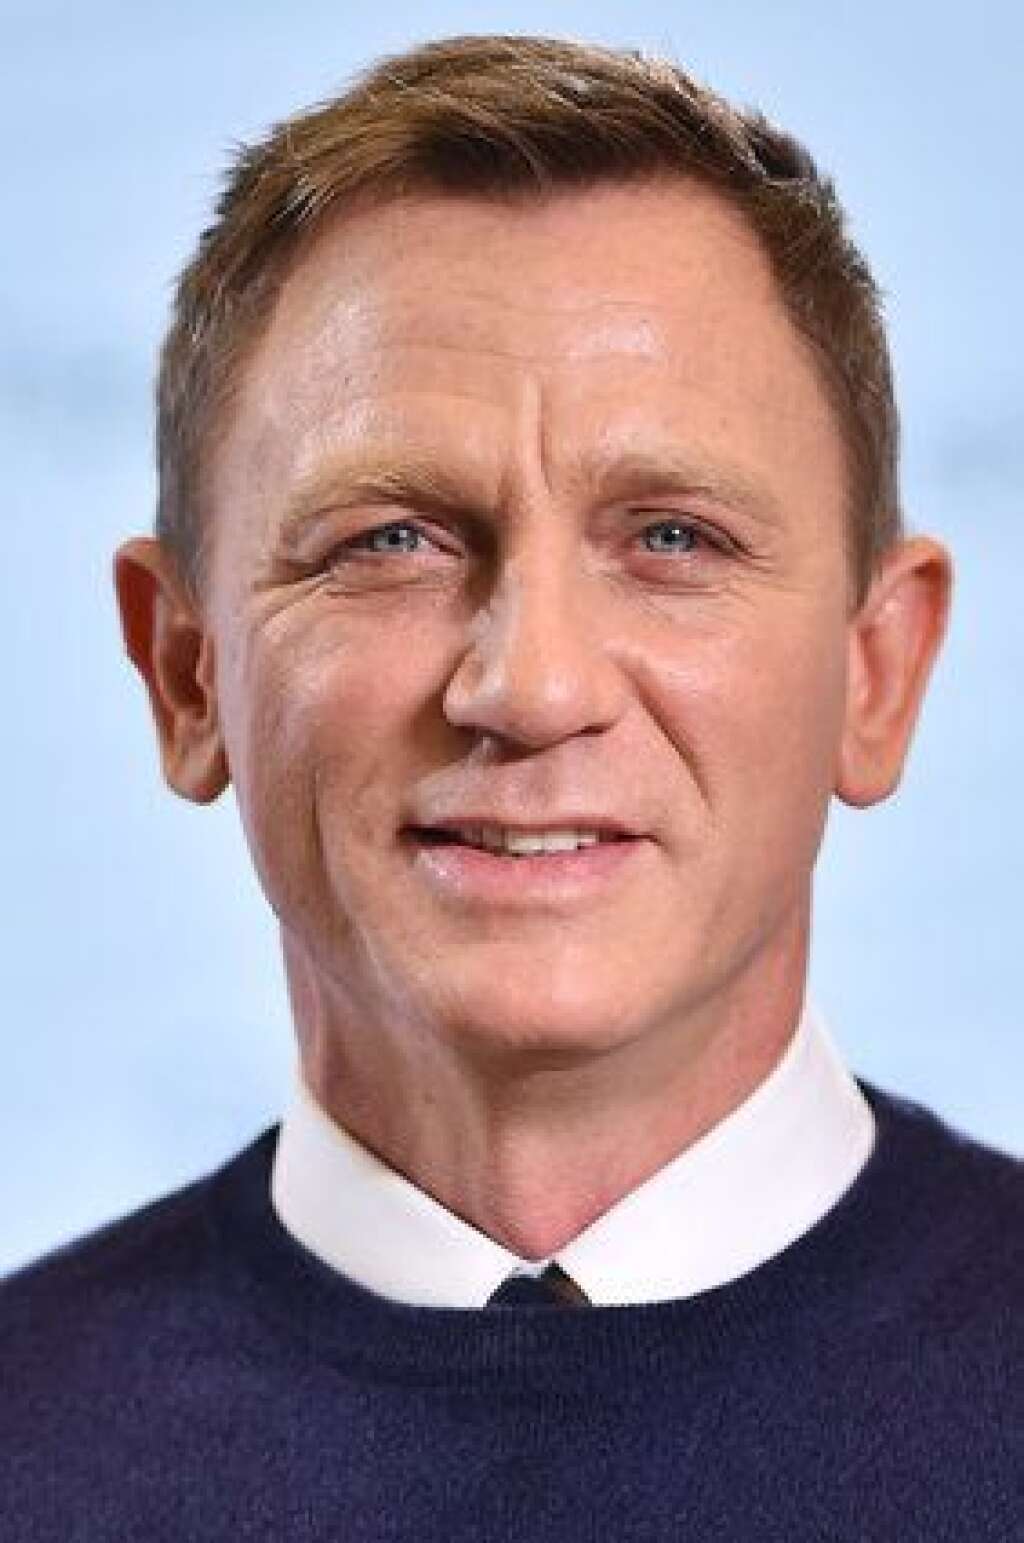 James Bond (Daniel Craig) -